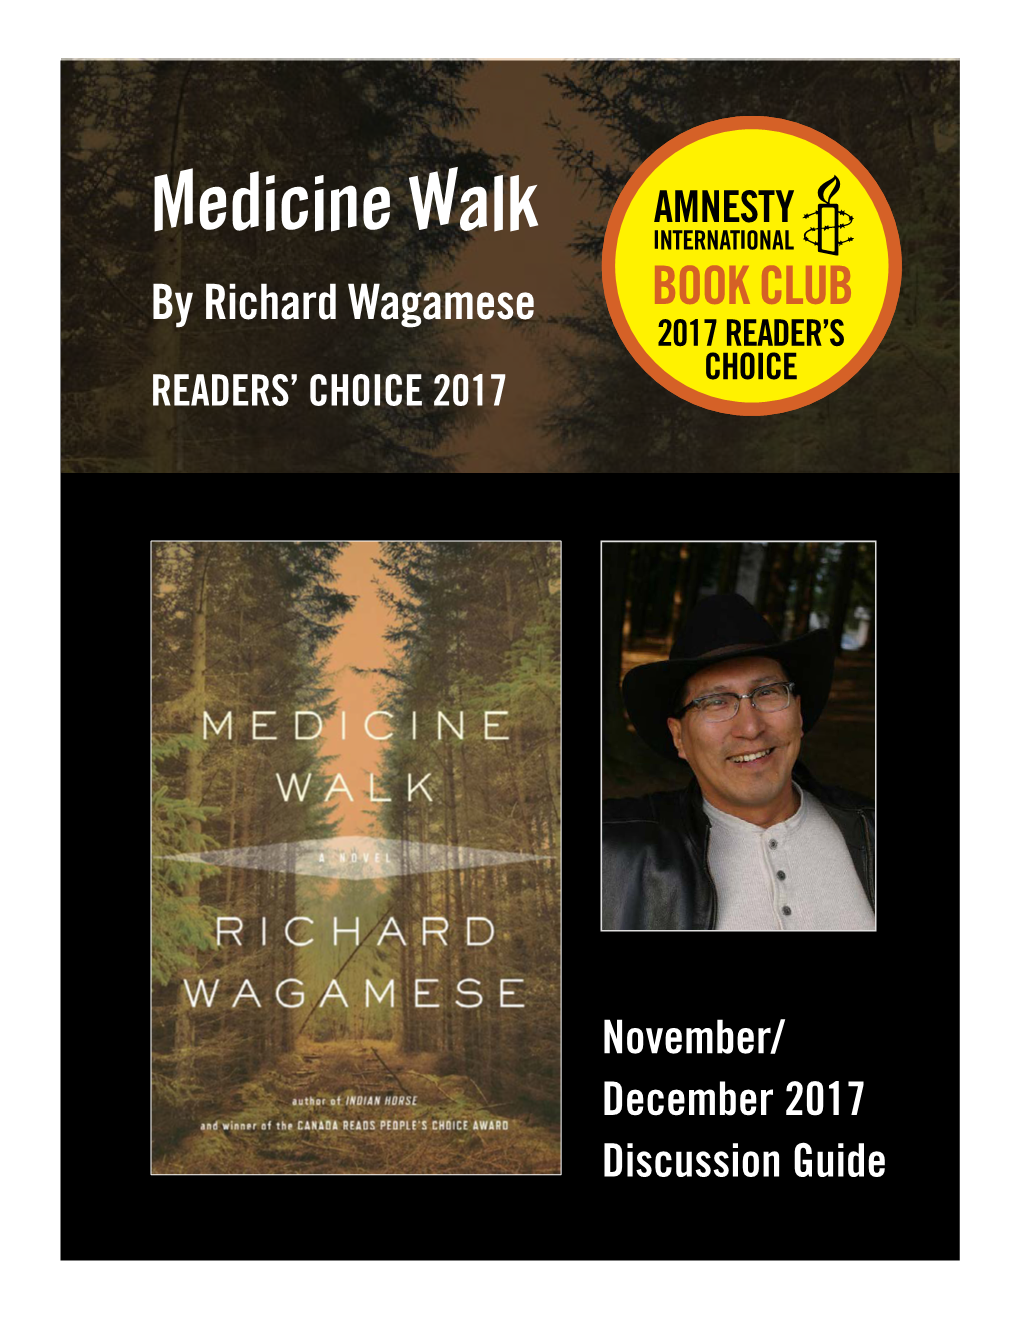 Medicine Walk by Richard Wagamese READERS’ CHOICE 2017